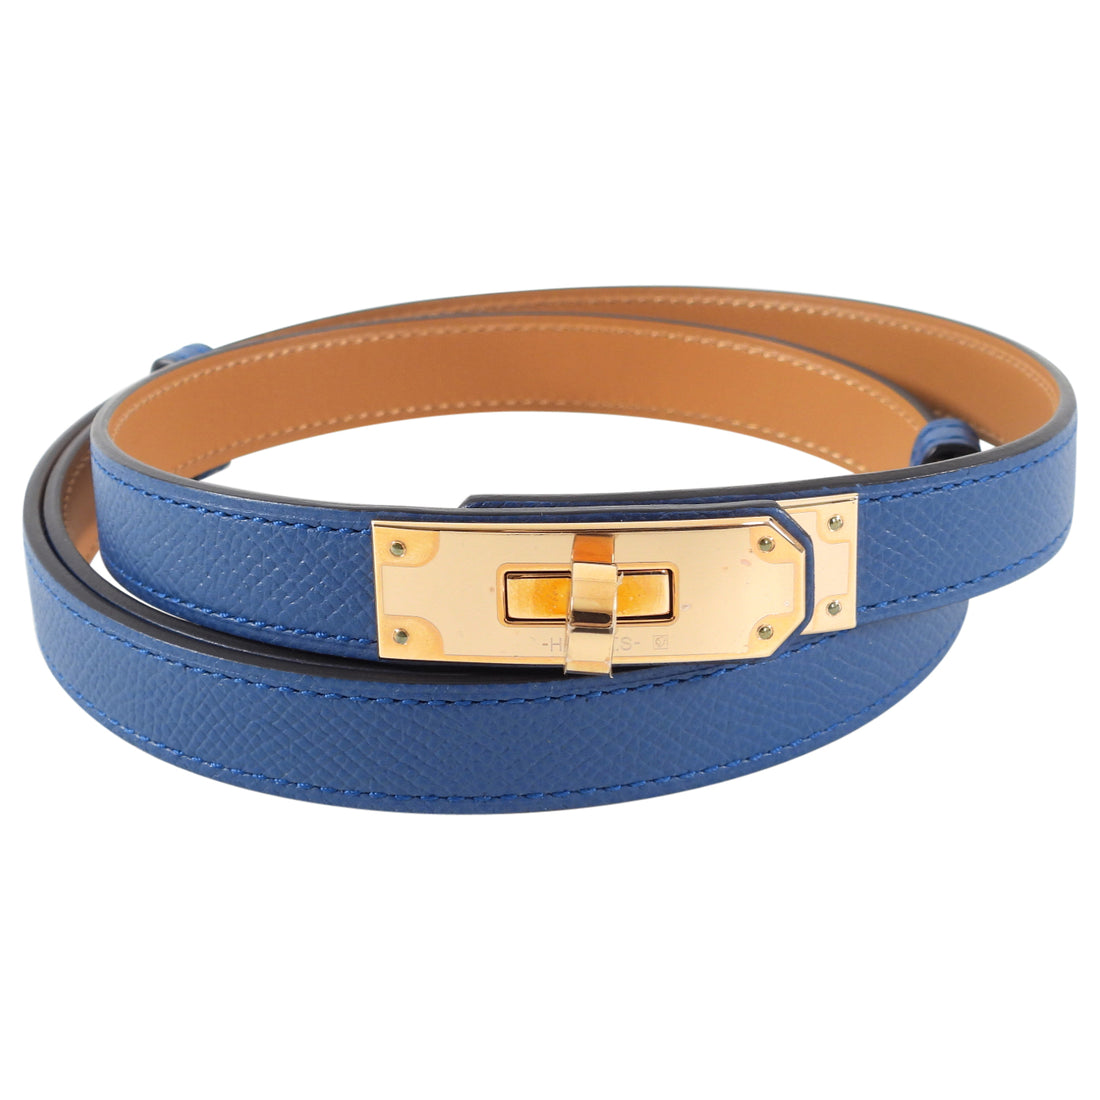 Hermes Kelly 18 Belt in Colvert Blue Epsom Rose Gold - free size